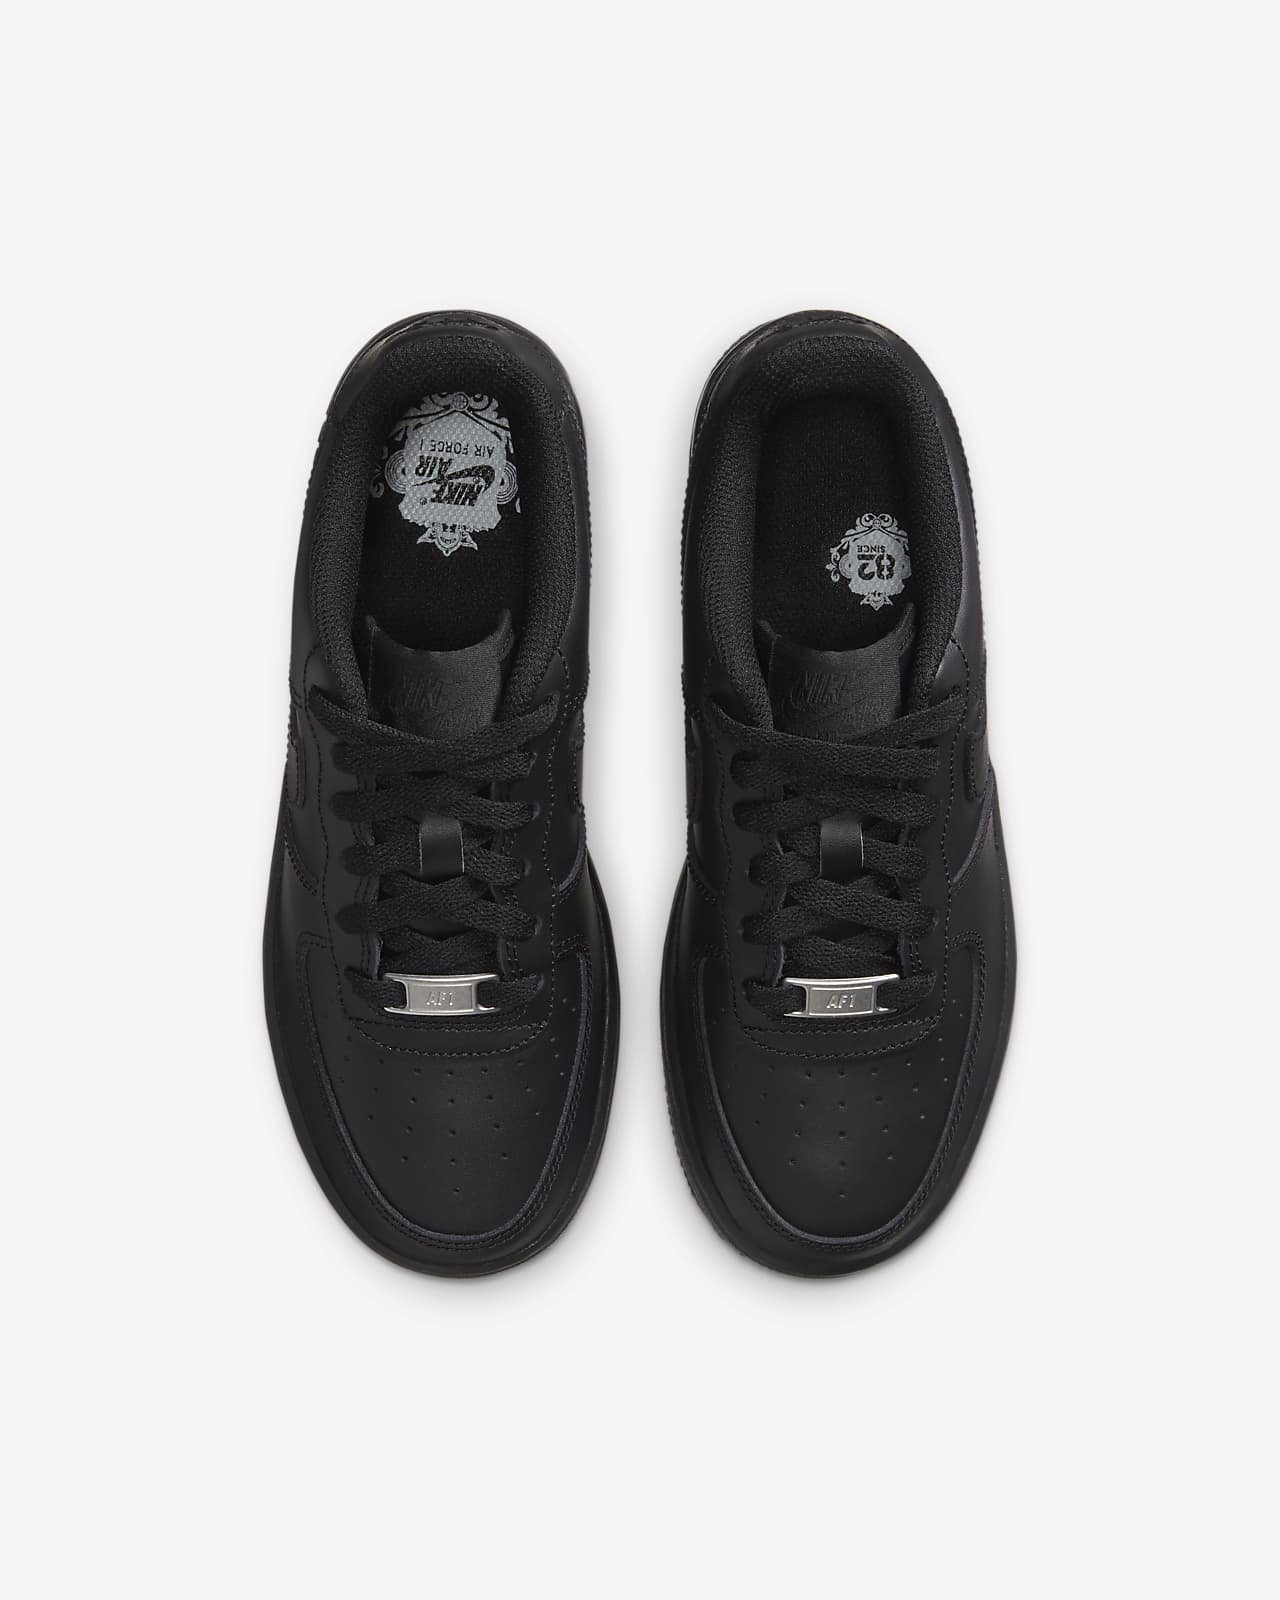 Nike Air Force 1 Schuh für ältere 